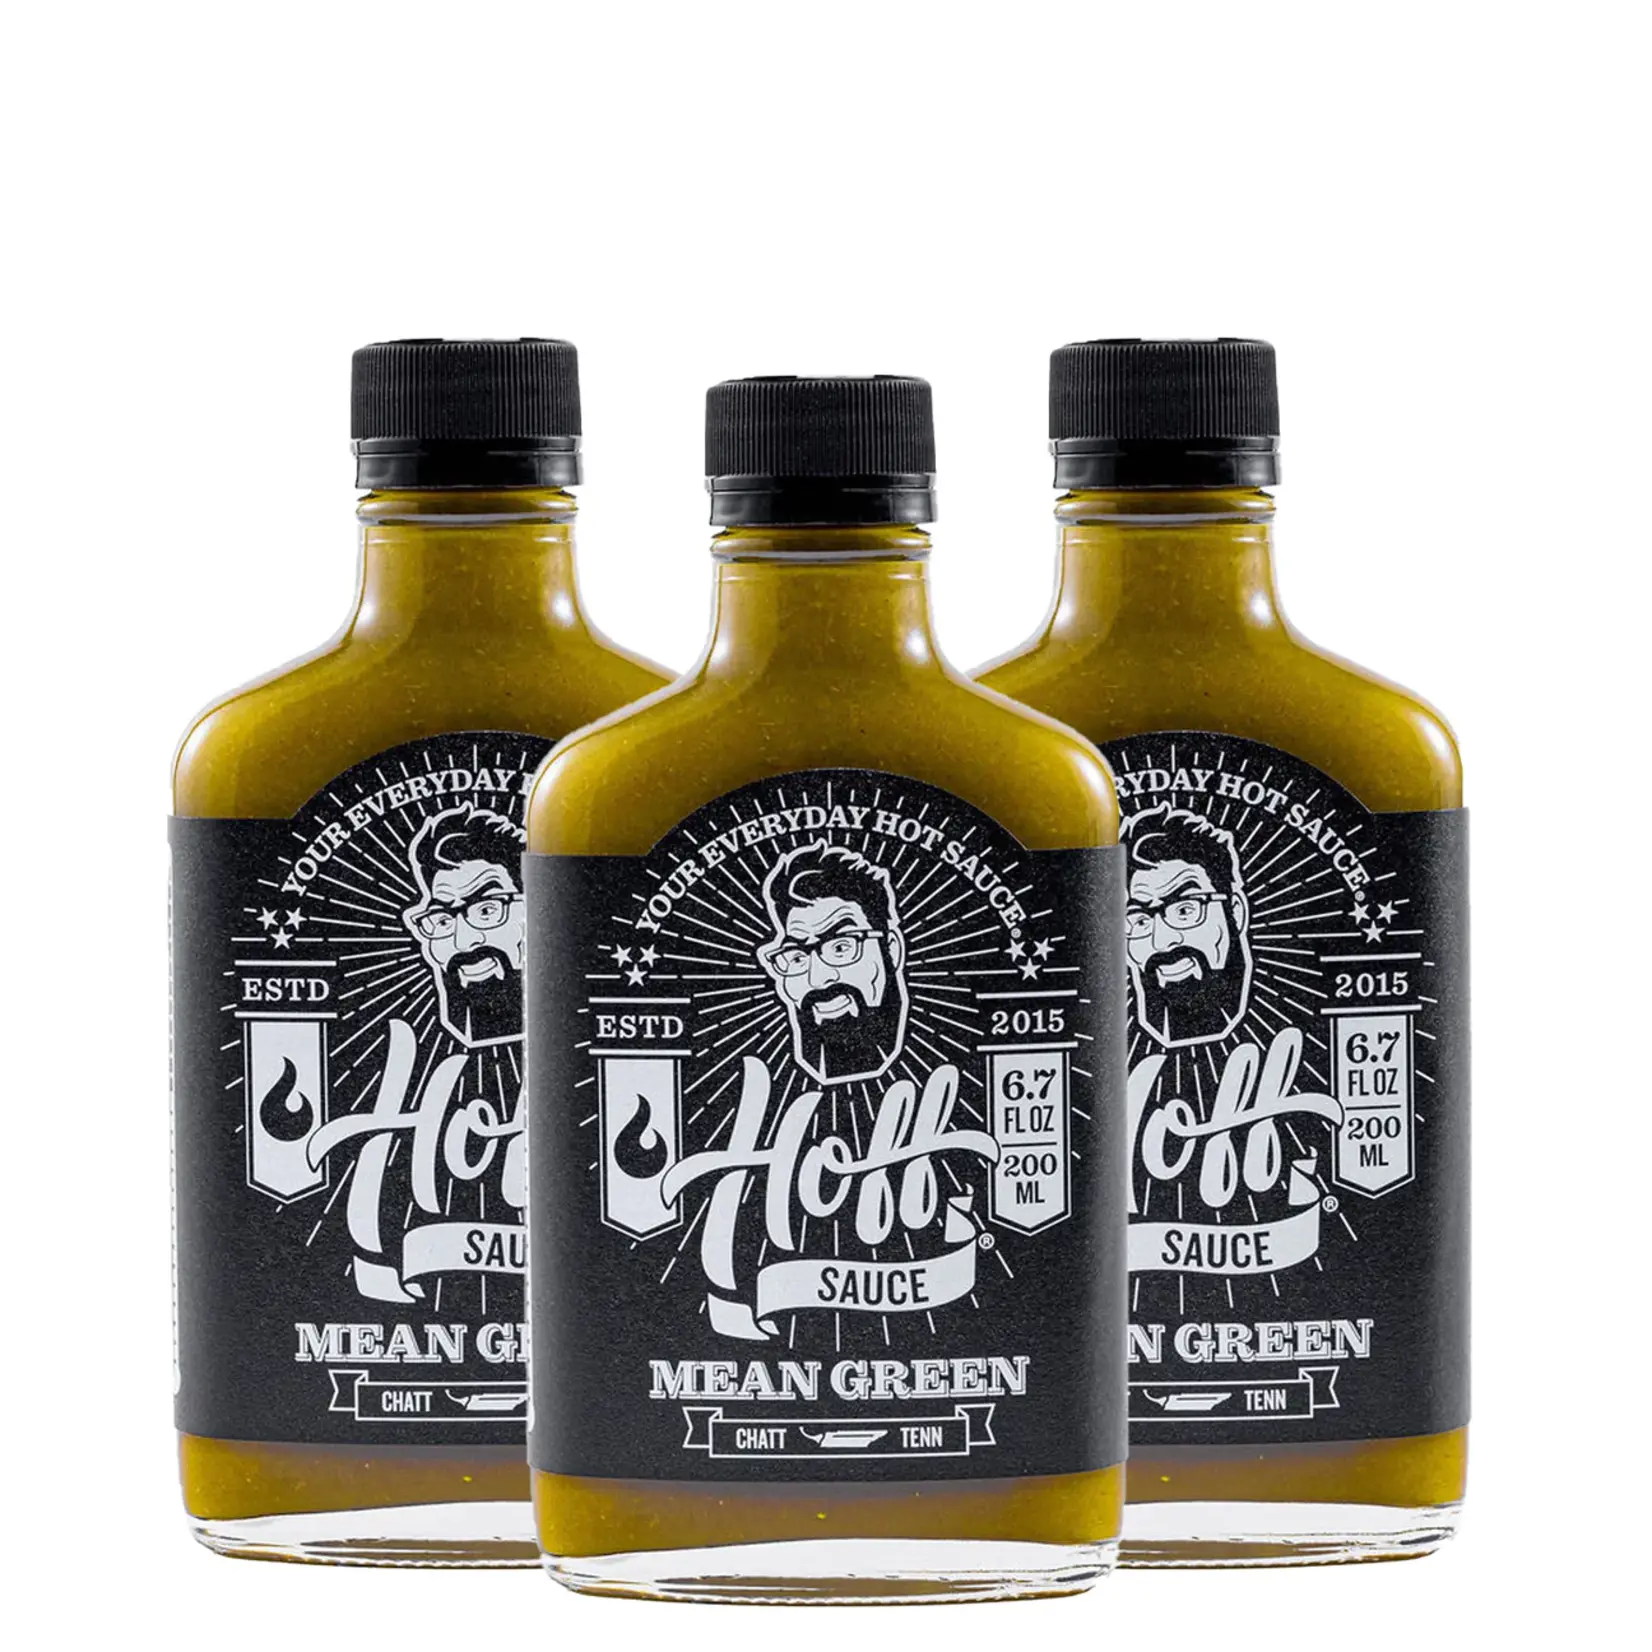 Hoff's Sauce Mean Green Hot Sauce